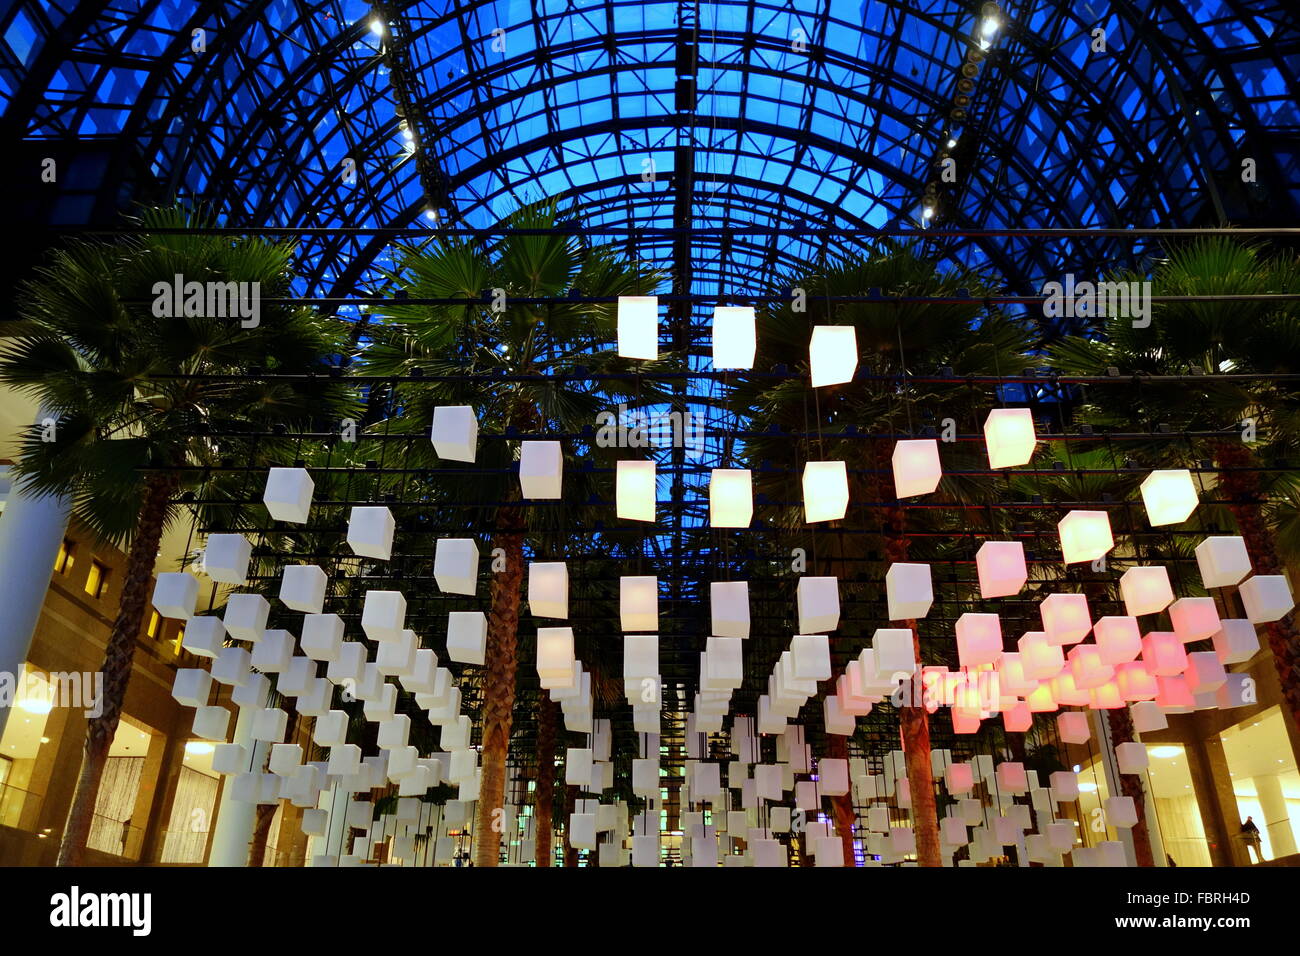 Luminaries - a spectacular lighting display at the Winter Garden, Brookfield Place, New York City, New York Stock Photo